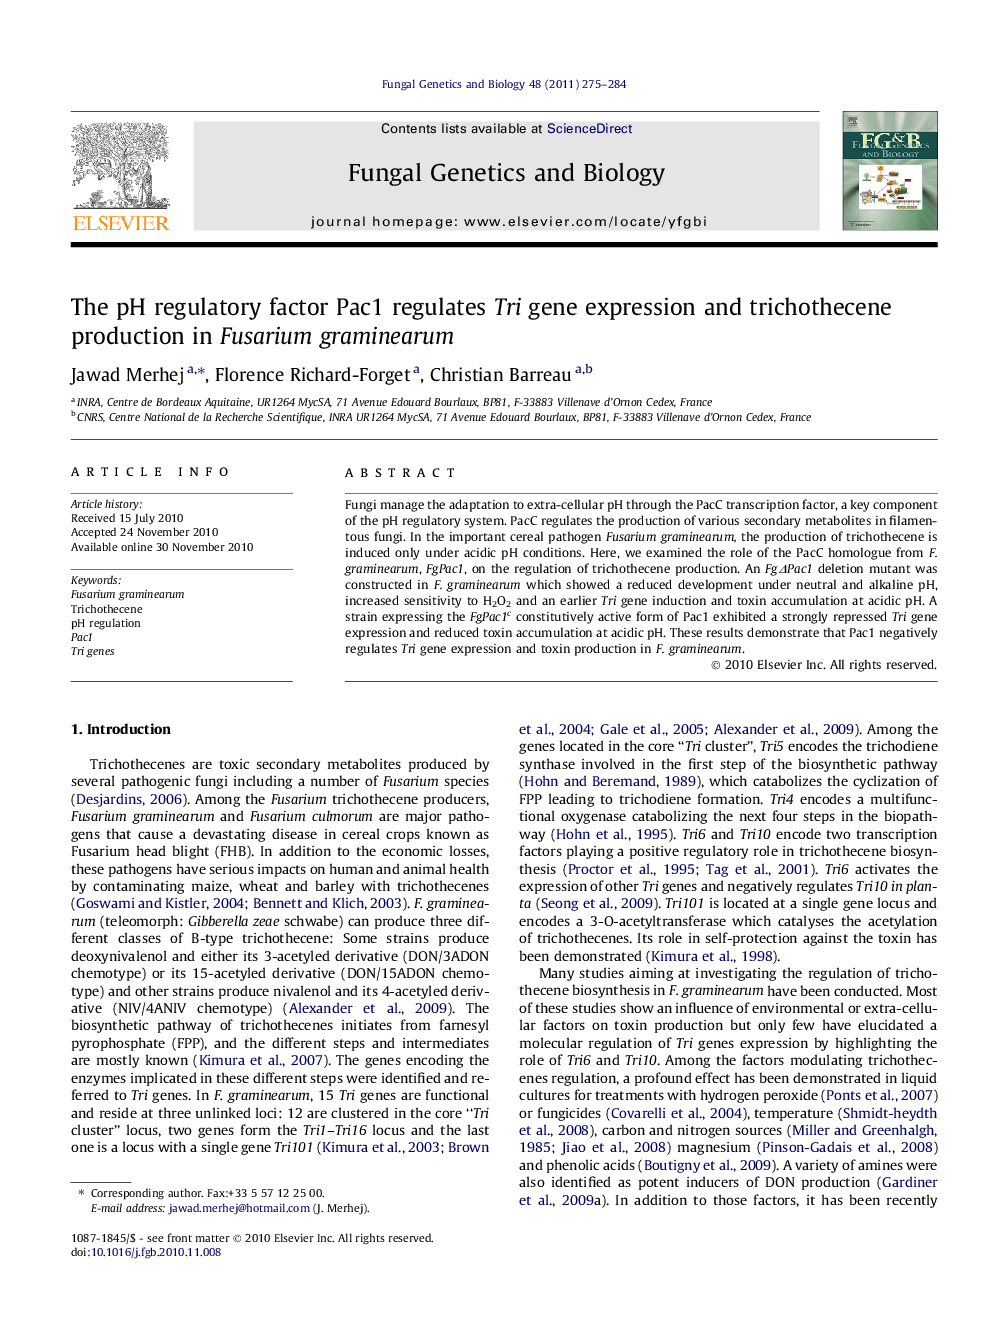 The pH regulatory factor Pac1 regulates Tri gene expression and trichothecene production in Fusarium graminearum